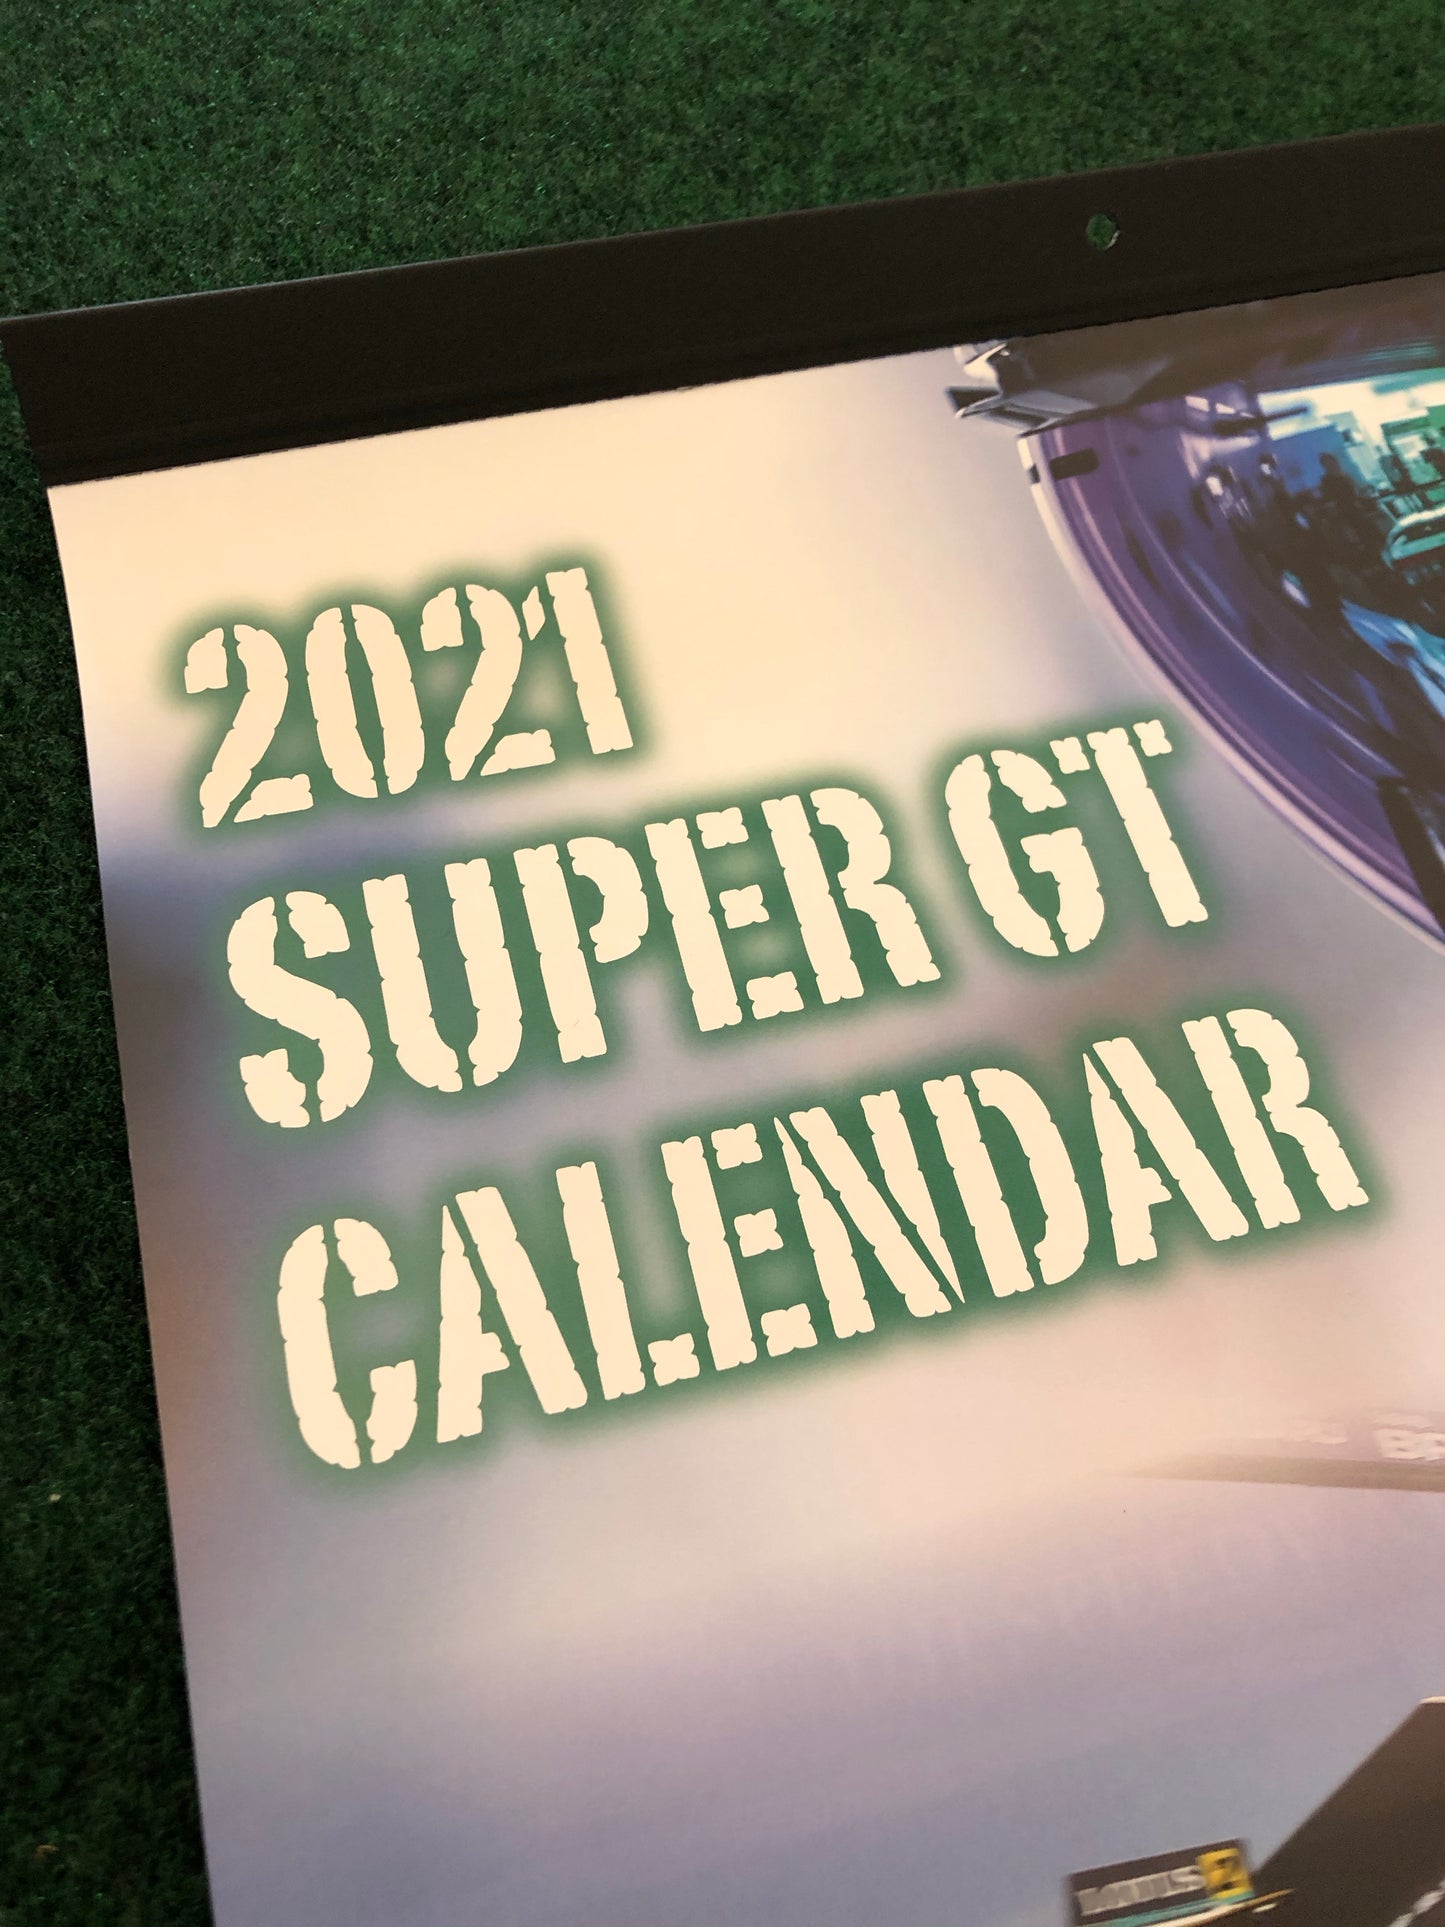 2021 Super GT Lotus Evora Large Calendar